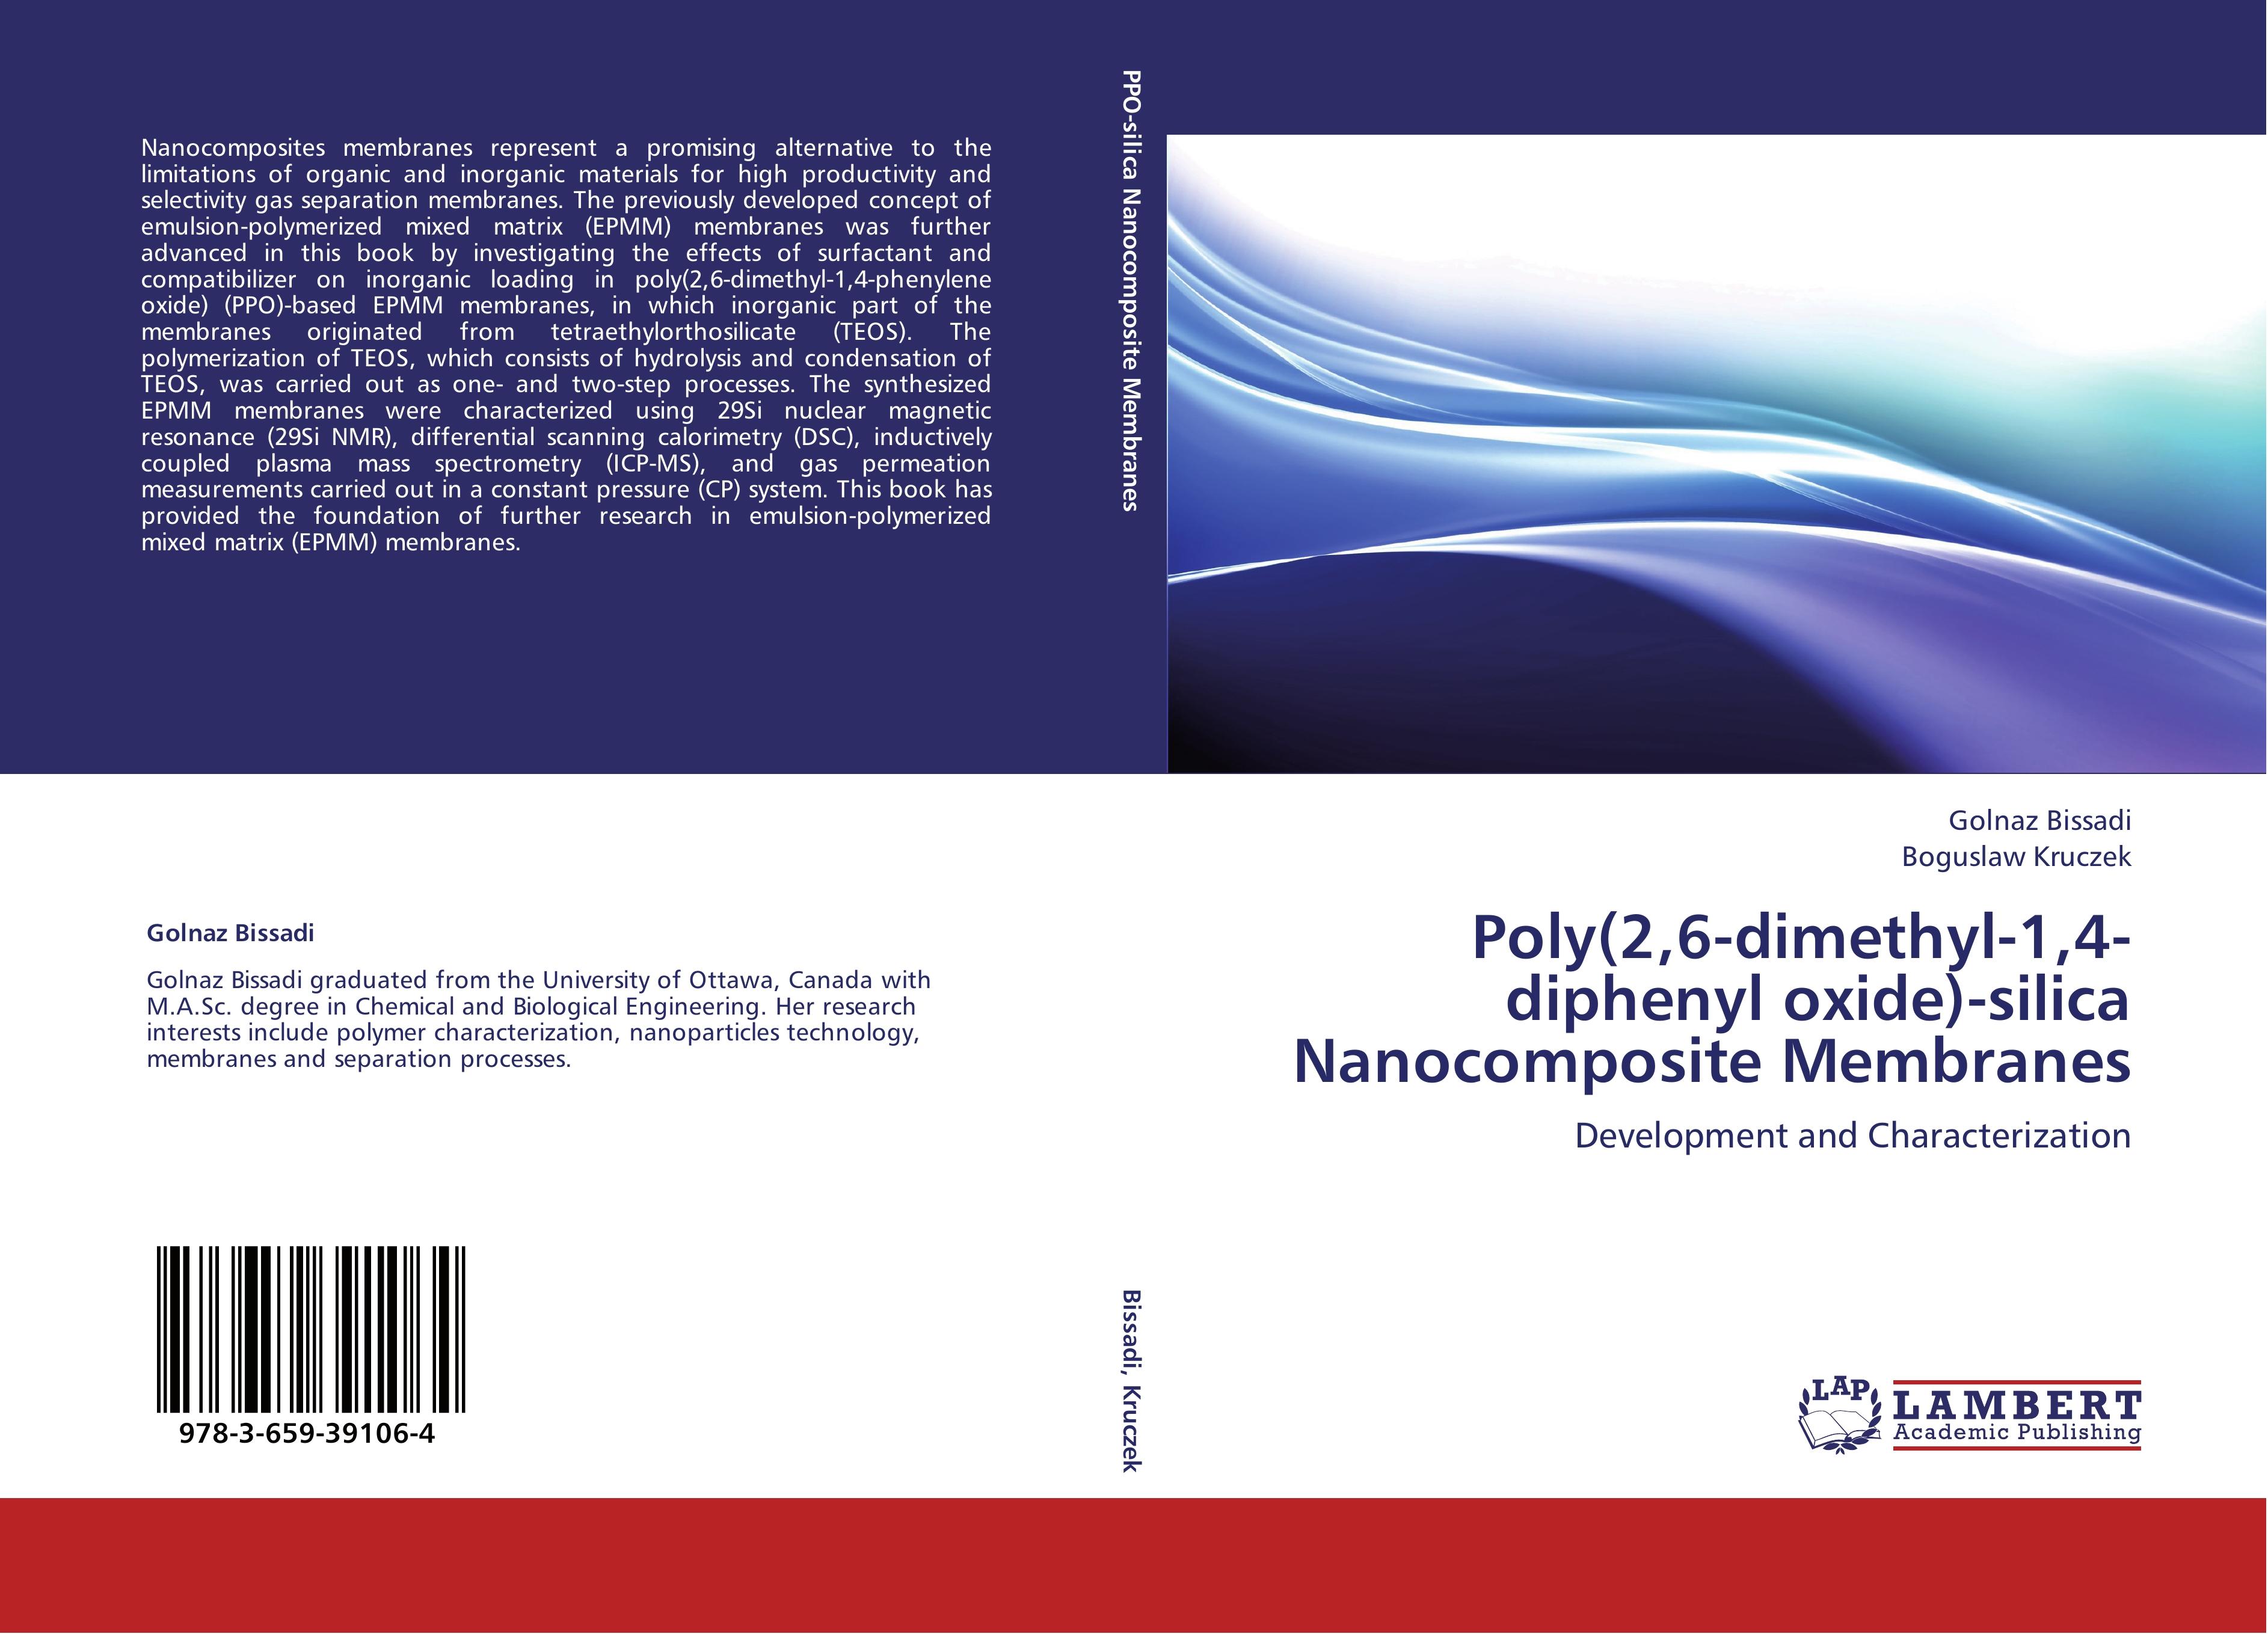 Poly(2,6-dimethyl-1,4-diphenyl oxide)-silica Nanocomposite Membranes - Golnaz Bissadi Boguslaw Kruczek